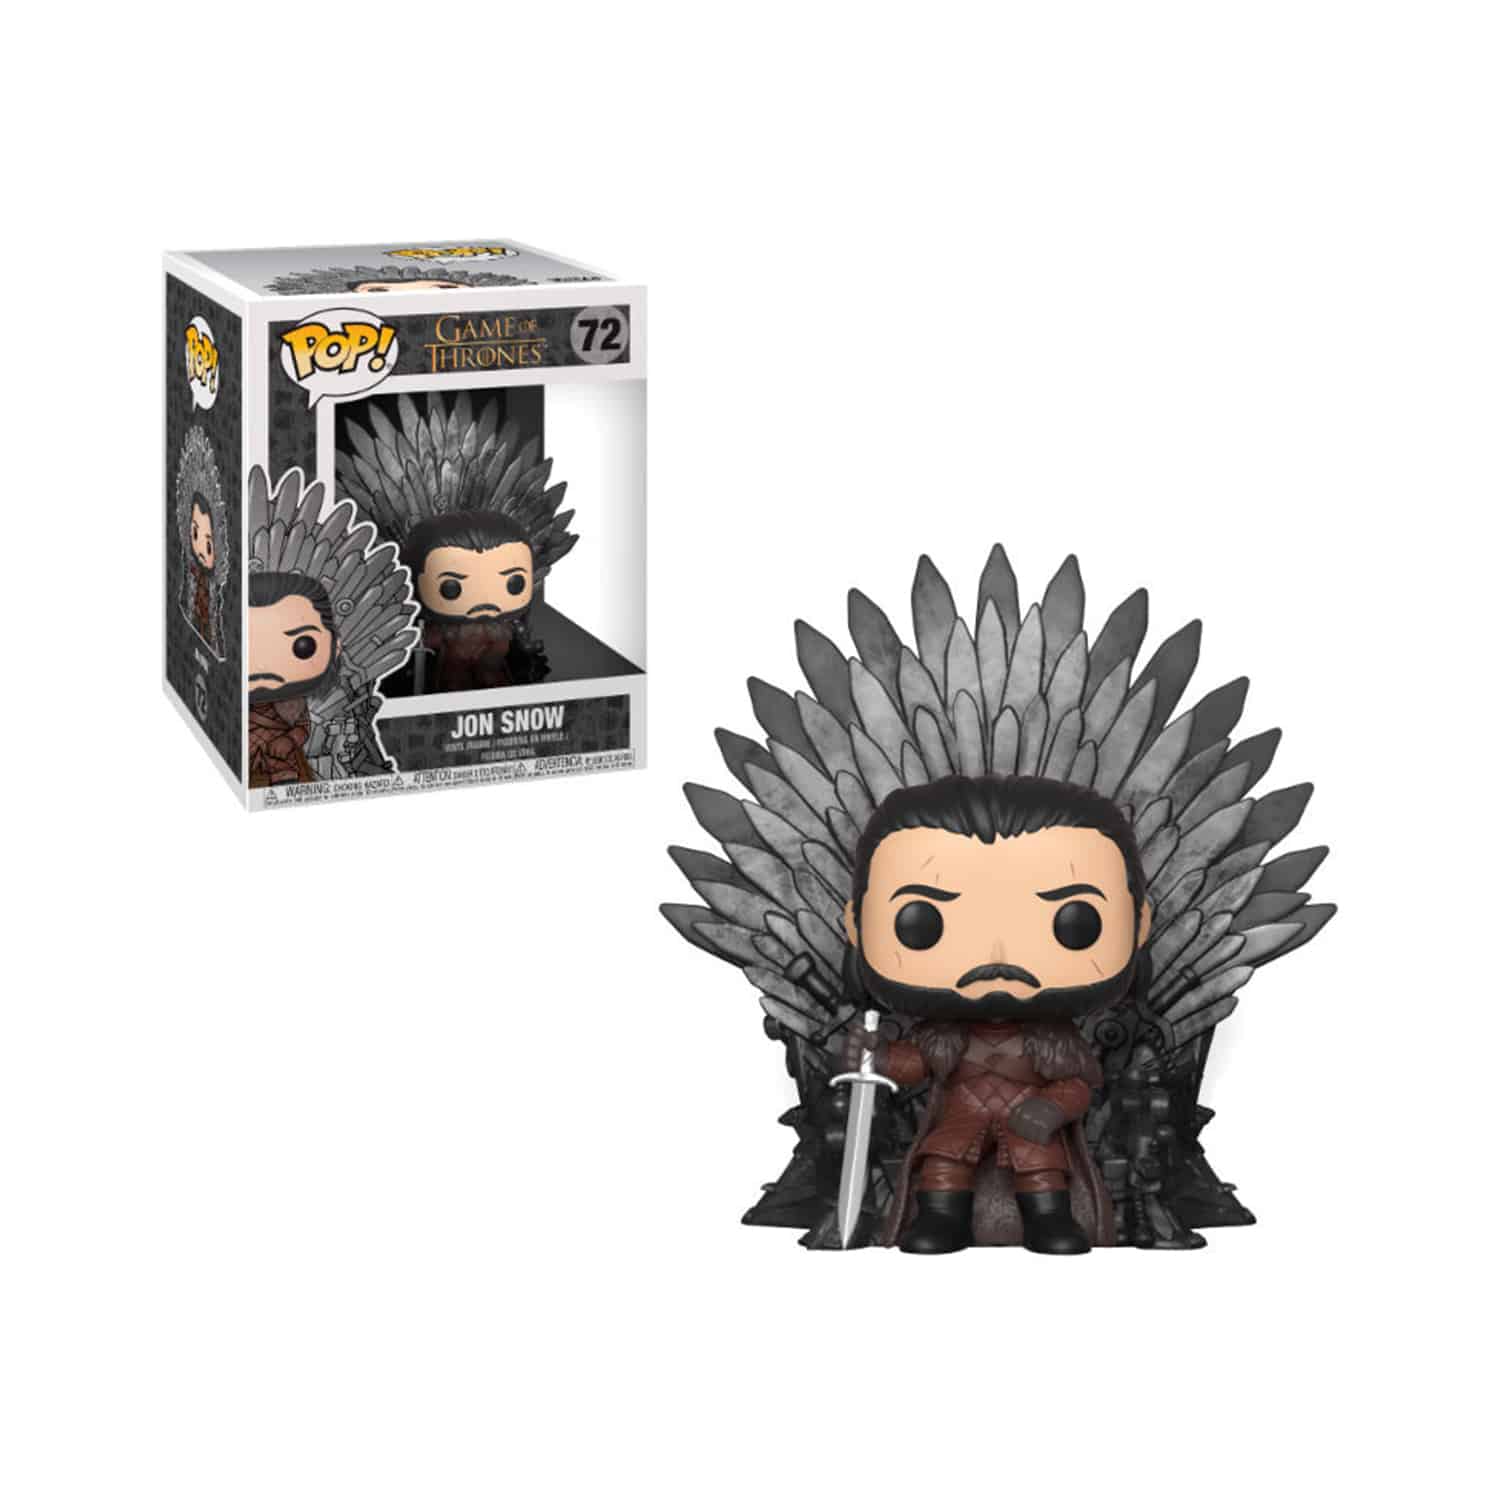 Game of Thrones - Jon Snow Sitting on Throne Funko Pop!